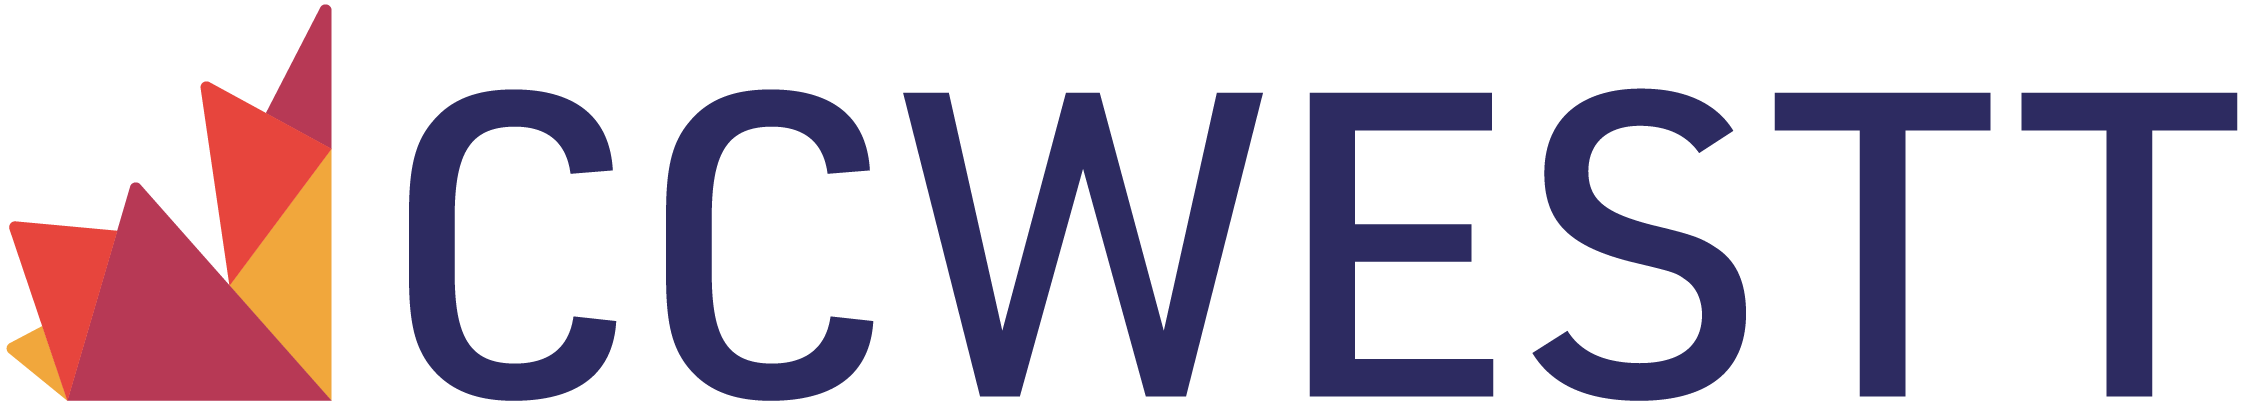 ccwestt logo